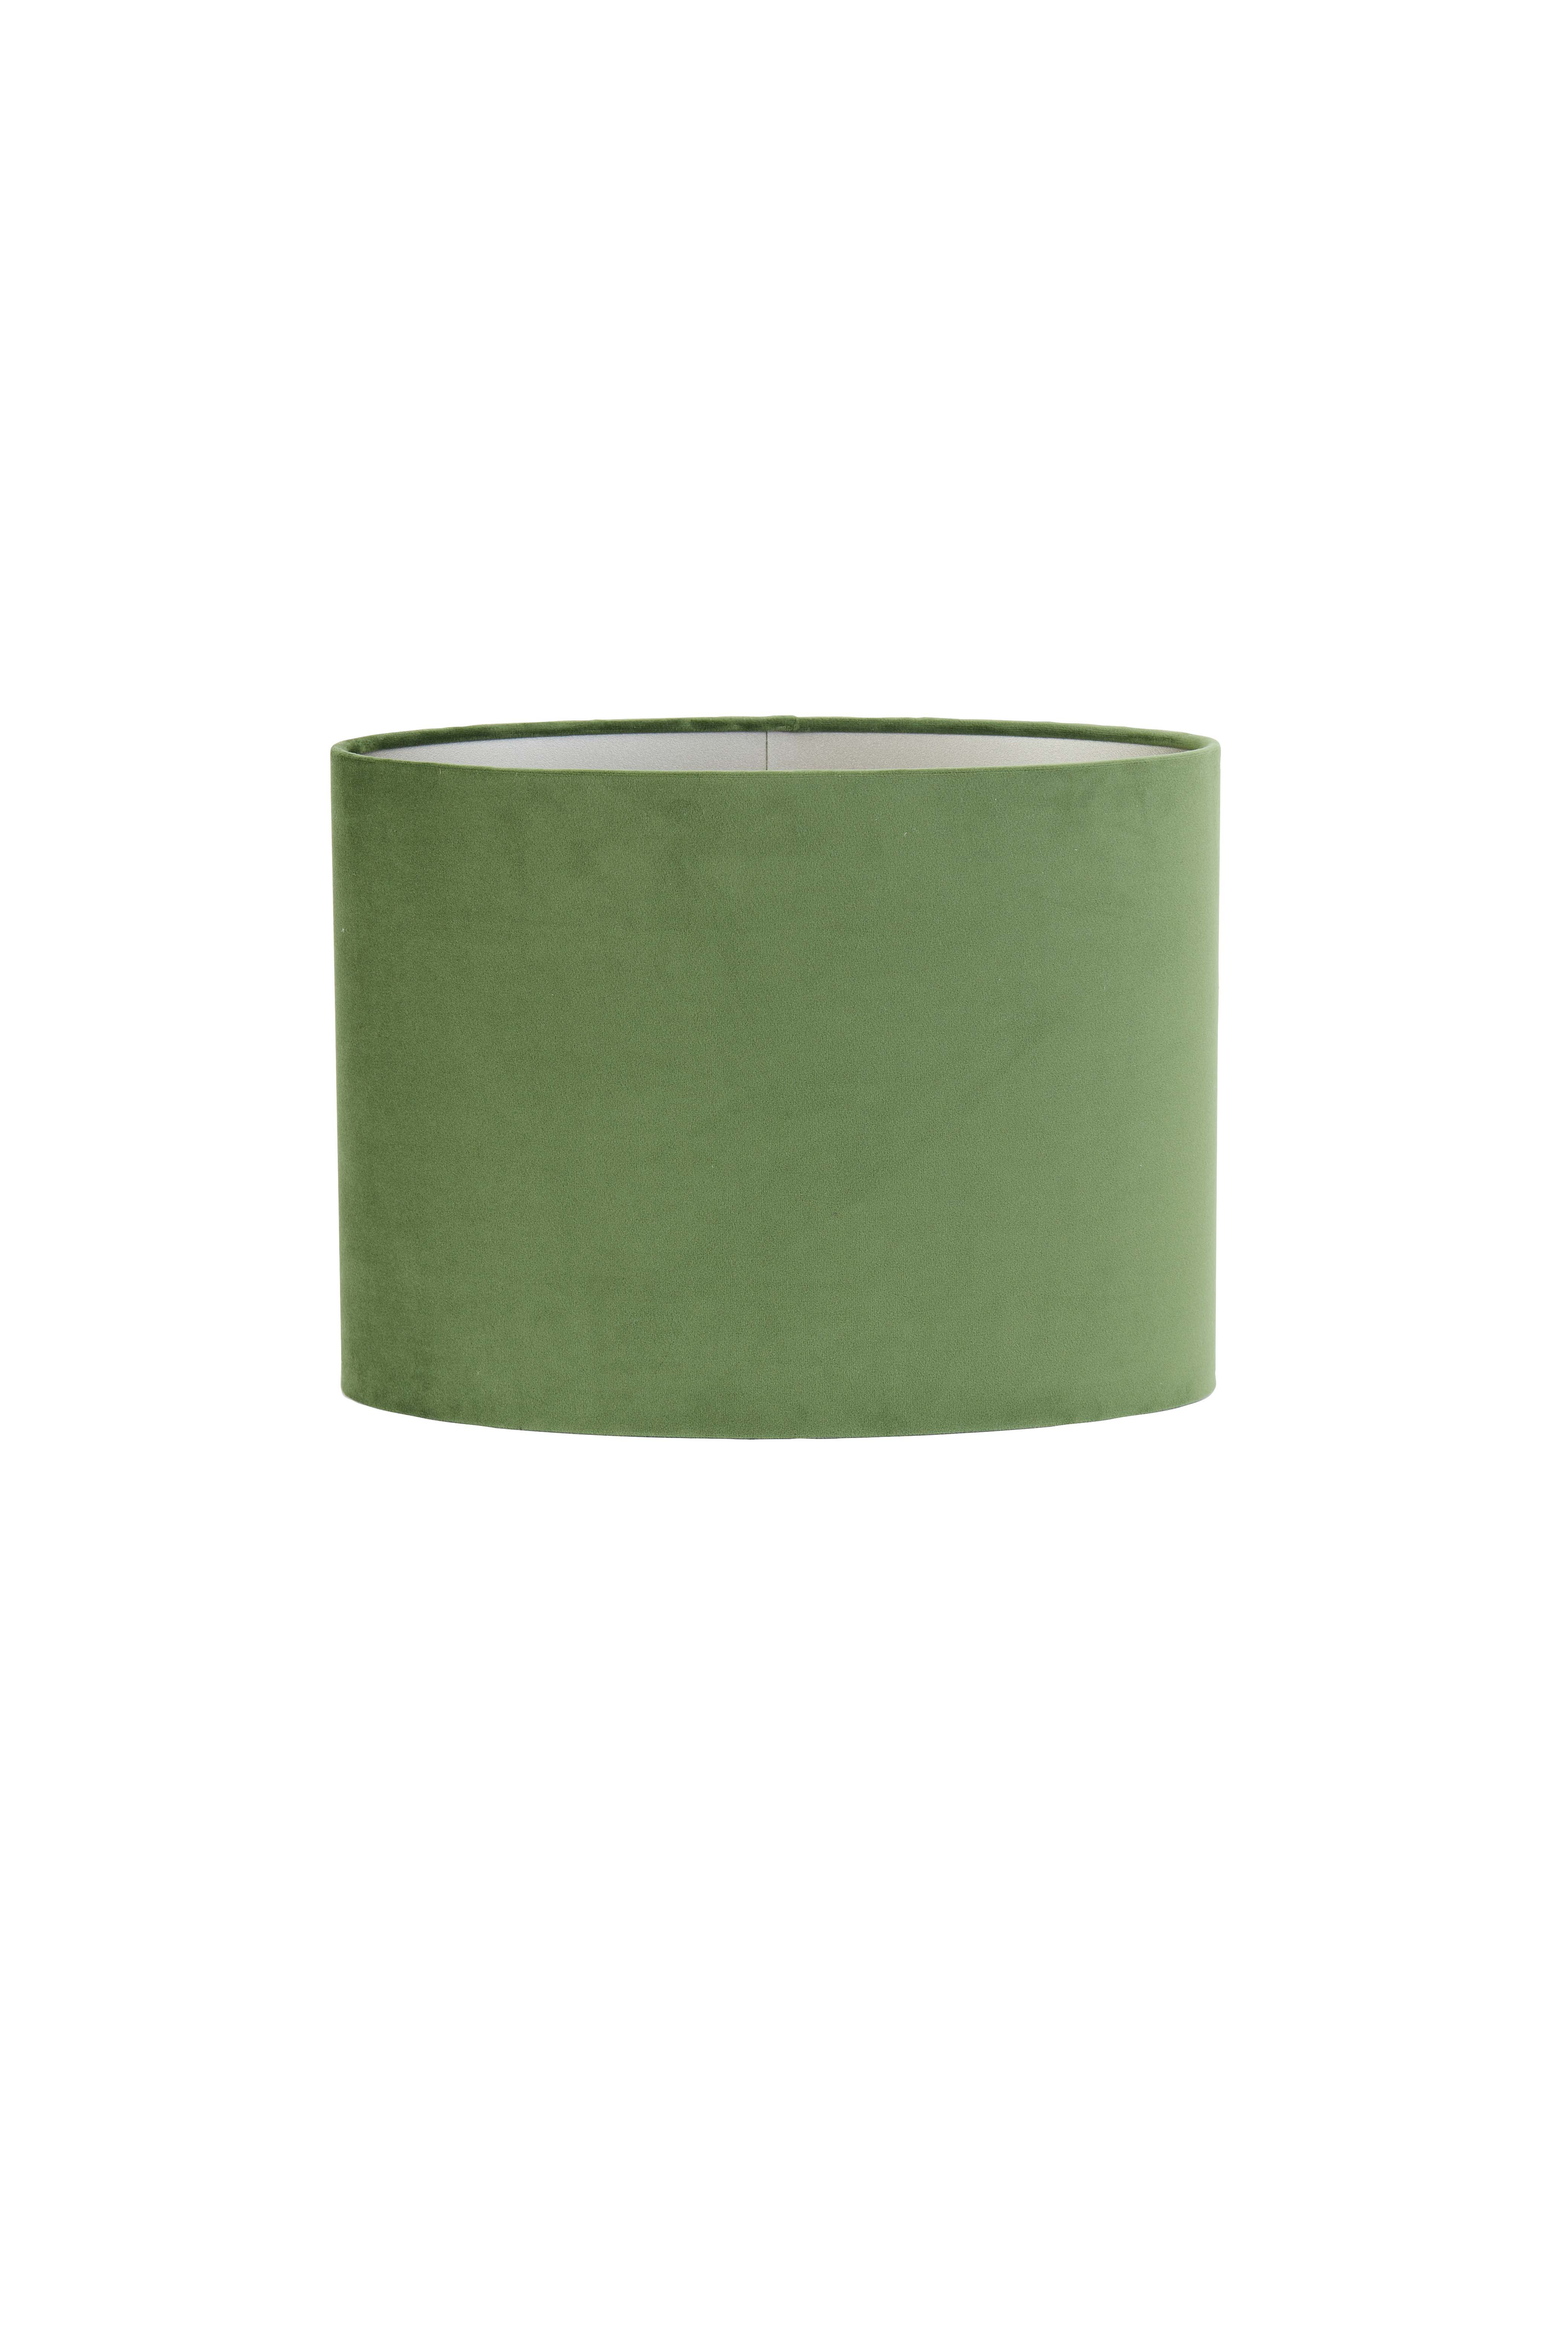 Shade oval straight slim 30-15-25 cm VELOURS dusty green